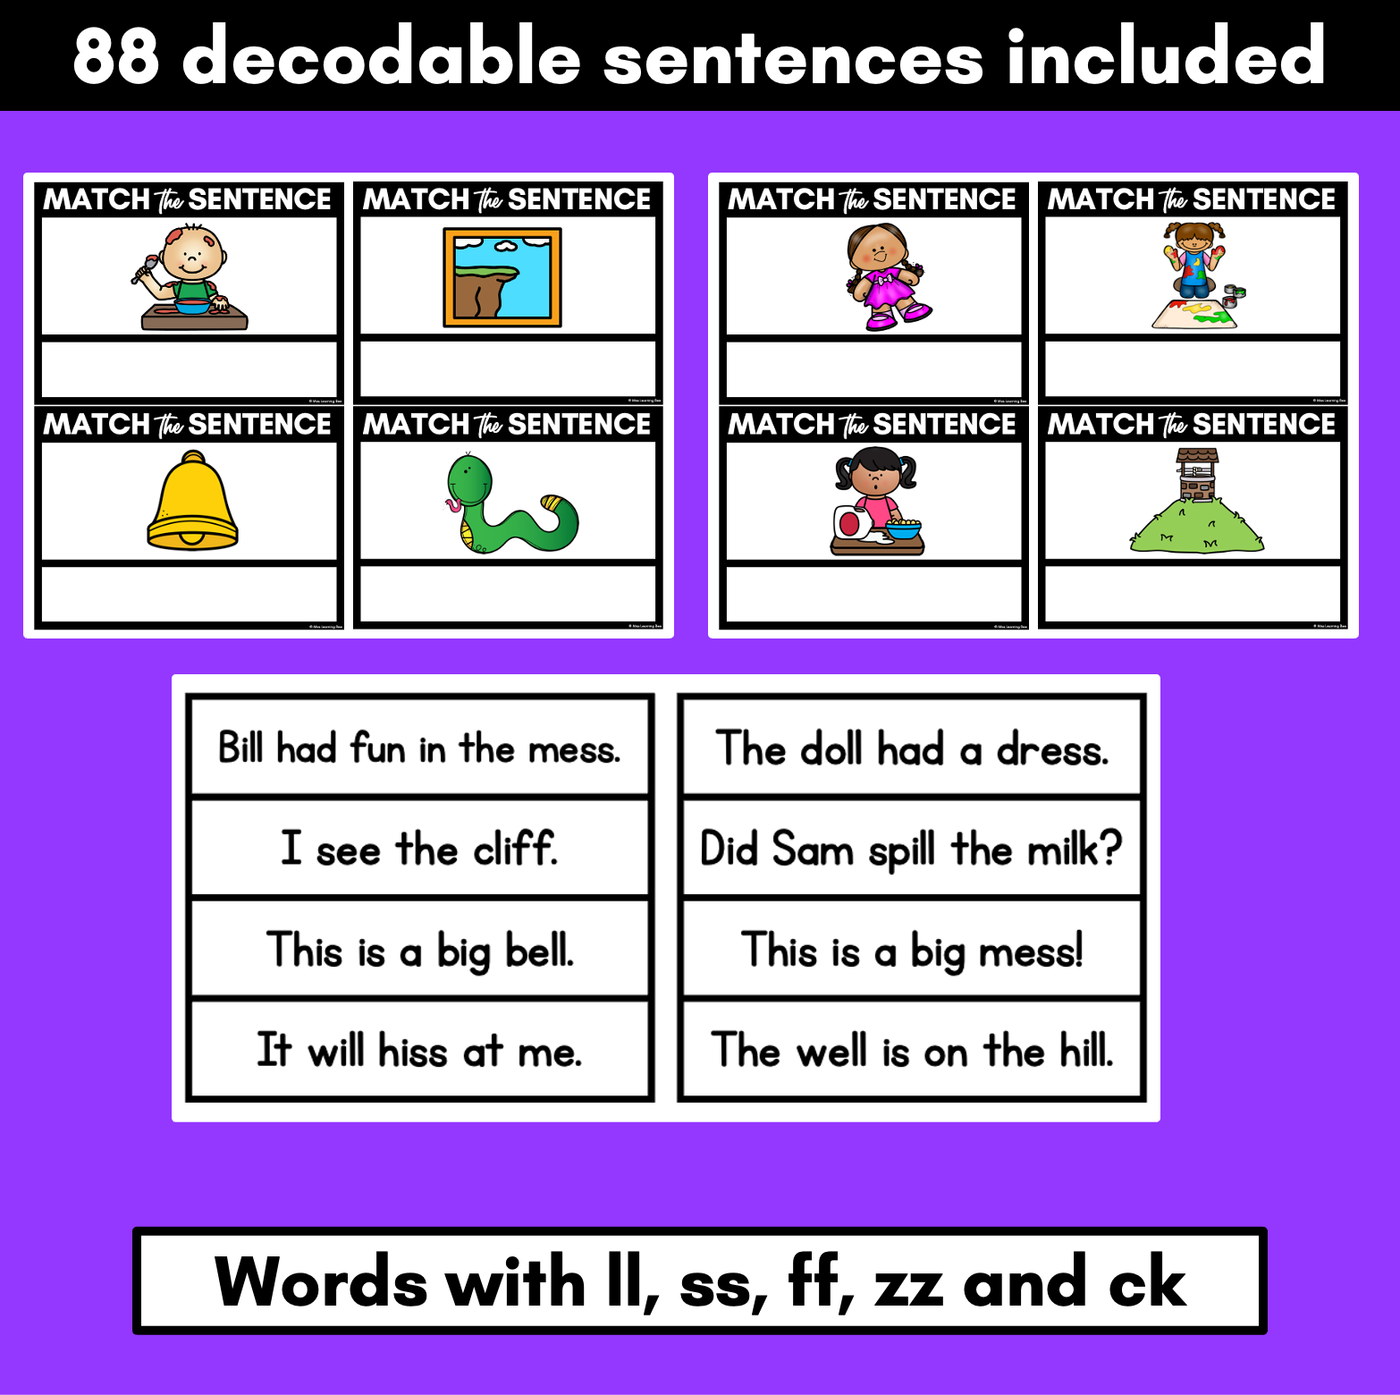 LL SS FF ZZ CK Decodable Sentences - Read and Match